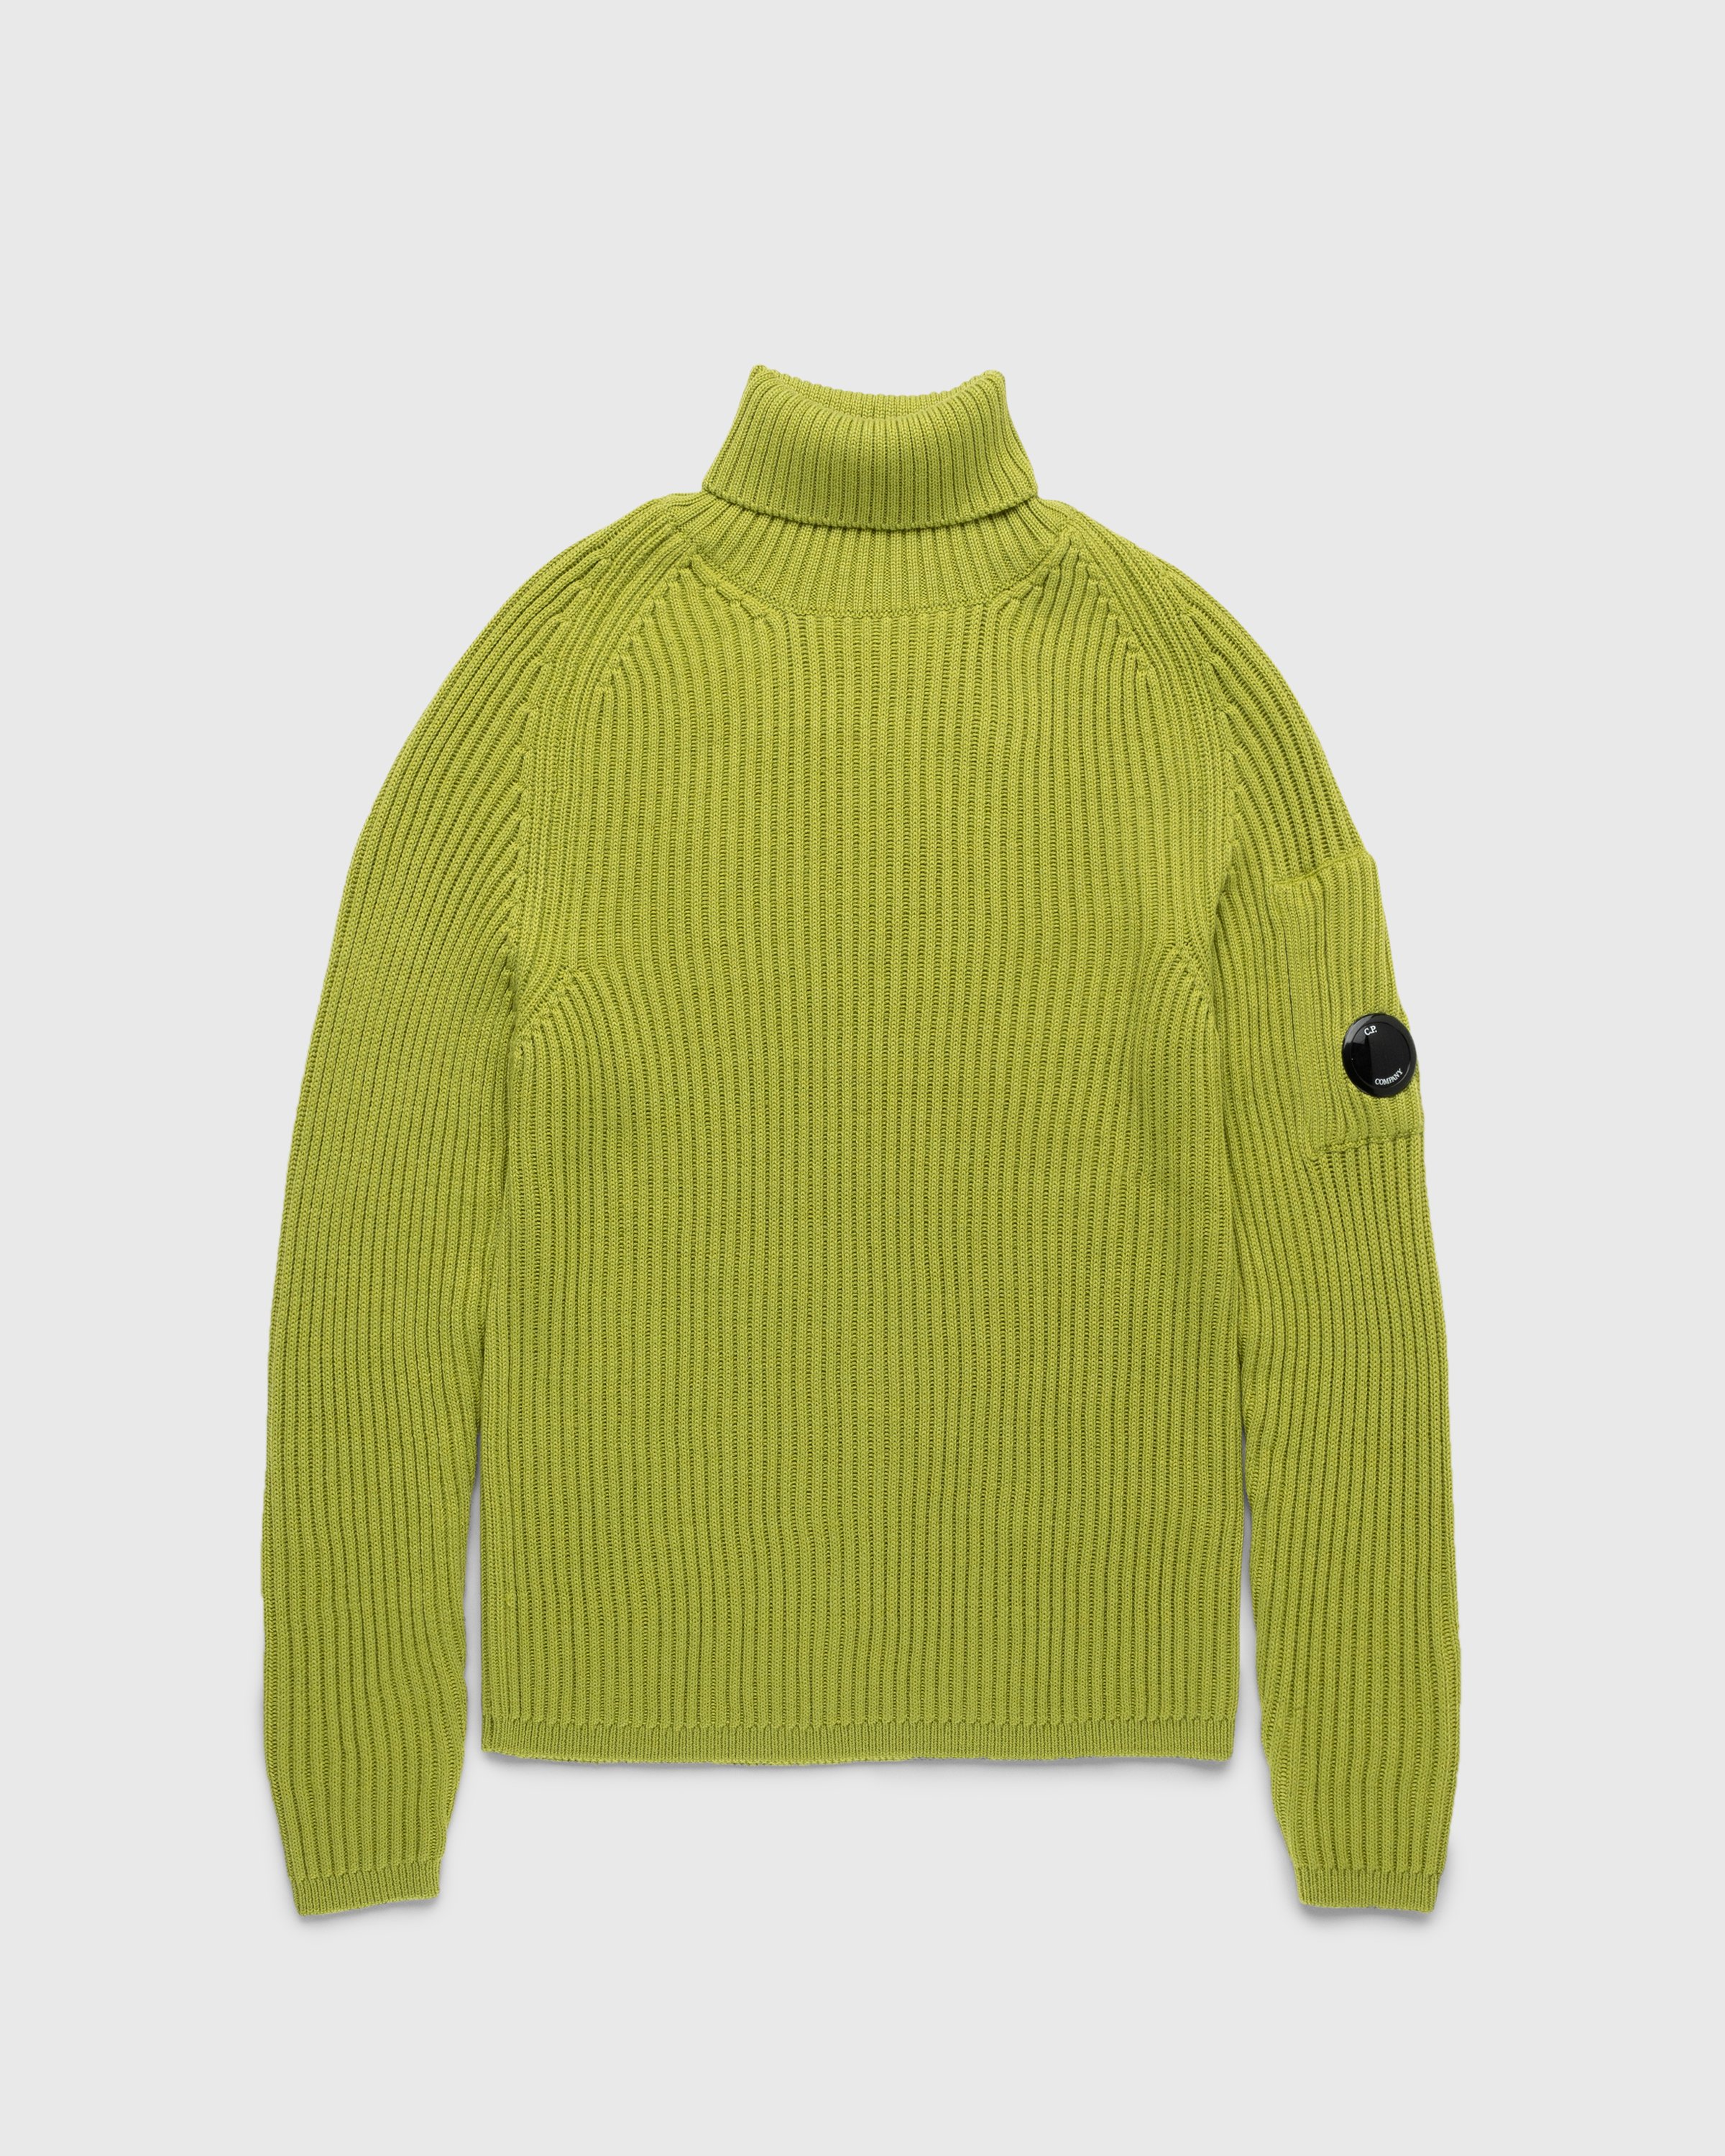 C.P. Company - Merino Wool Turtleneck Green - Clothing - Green - Image 1